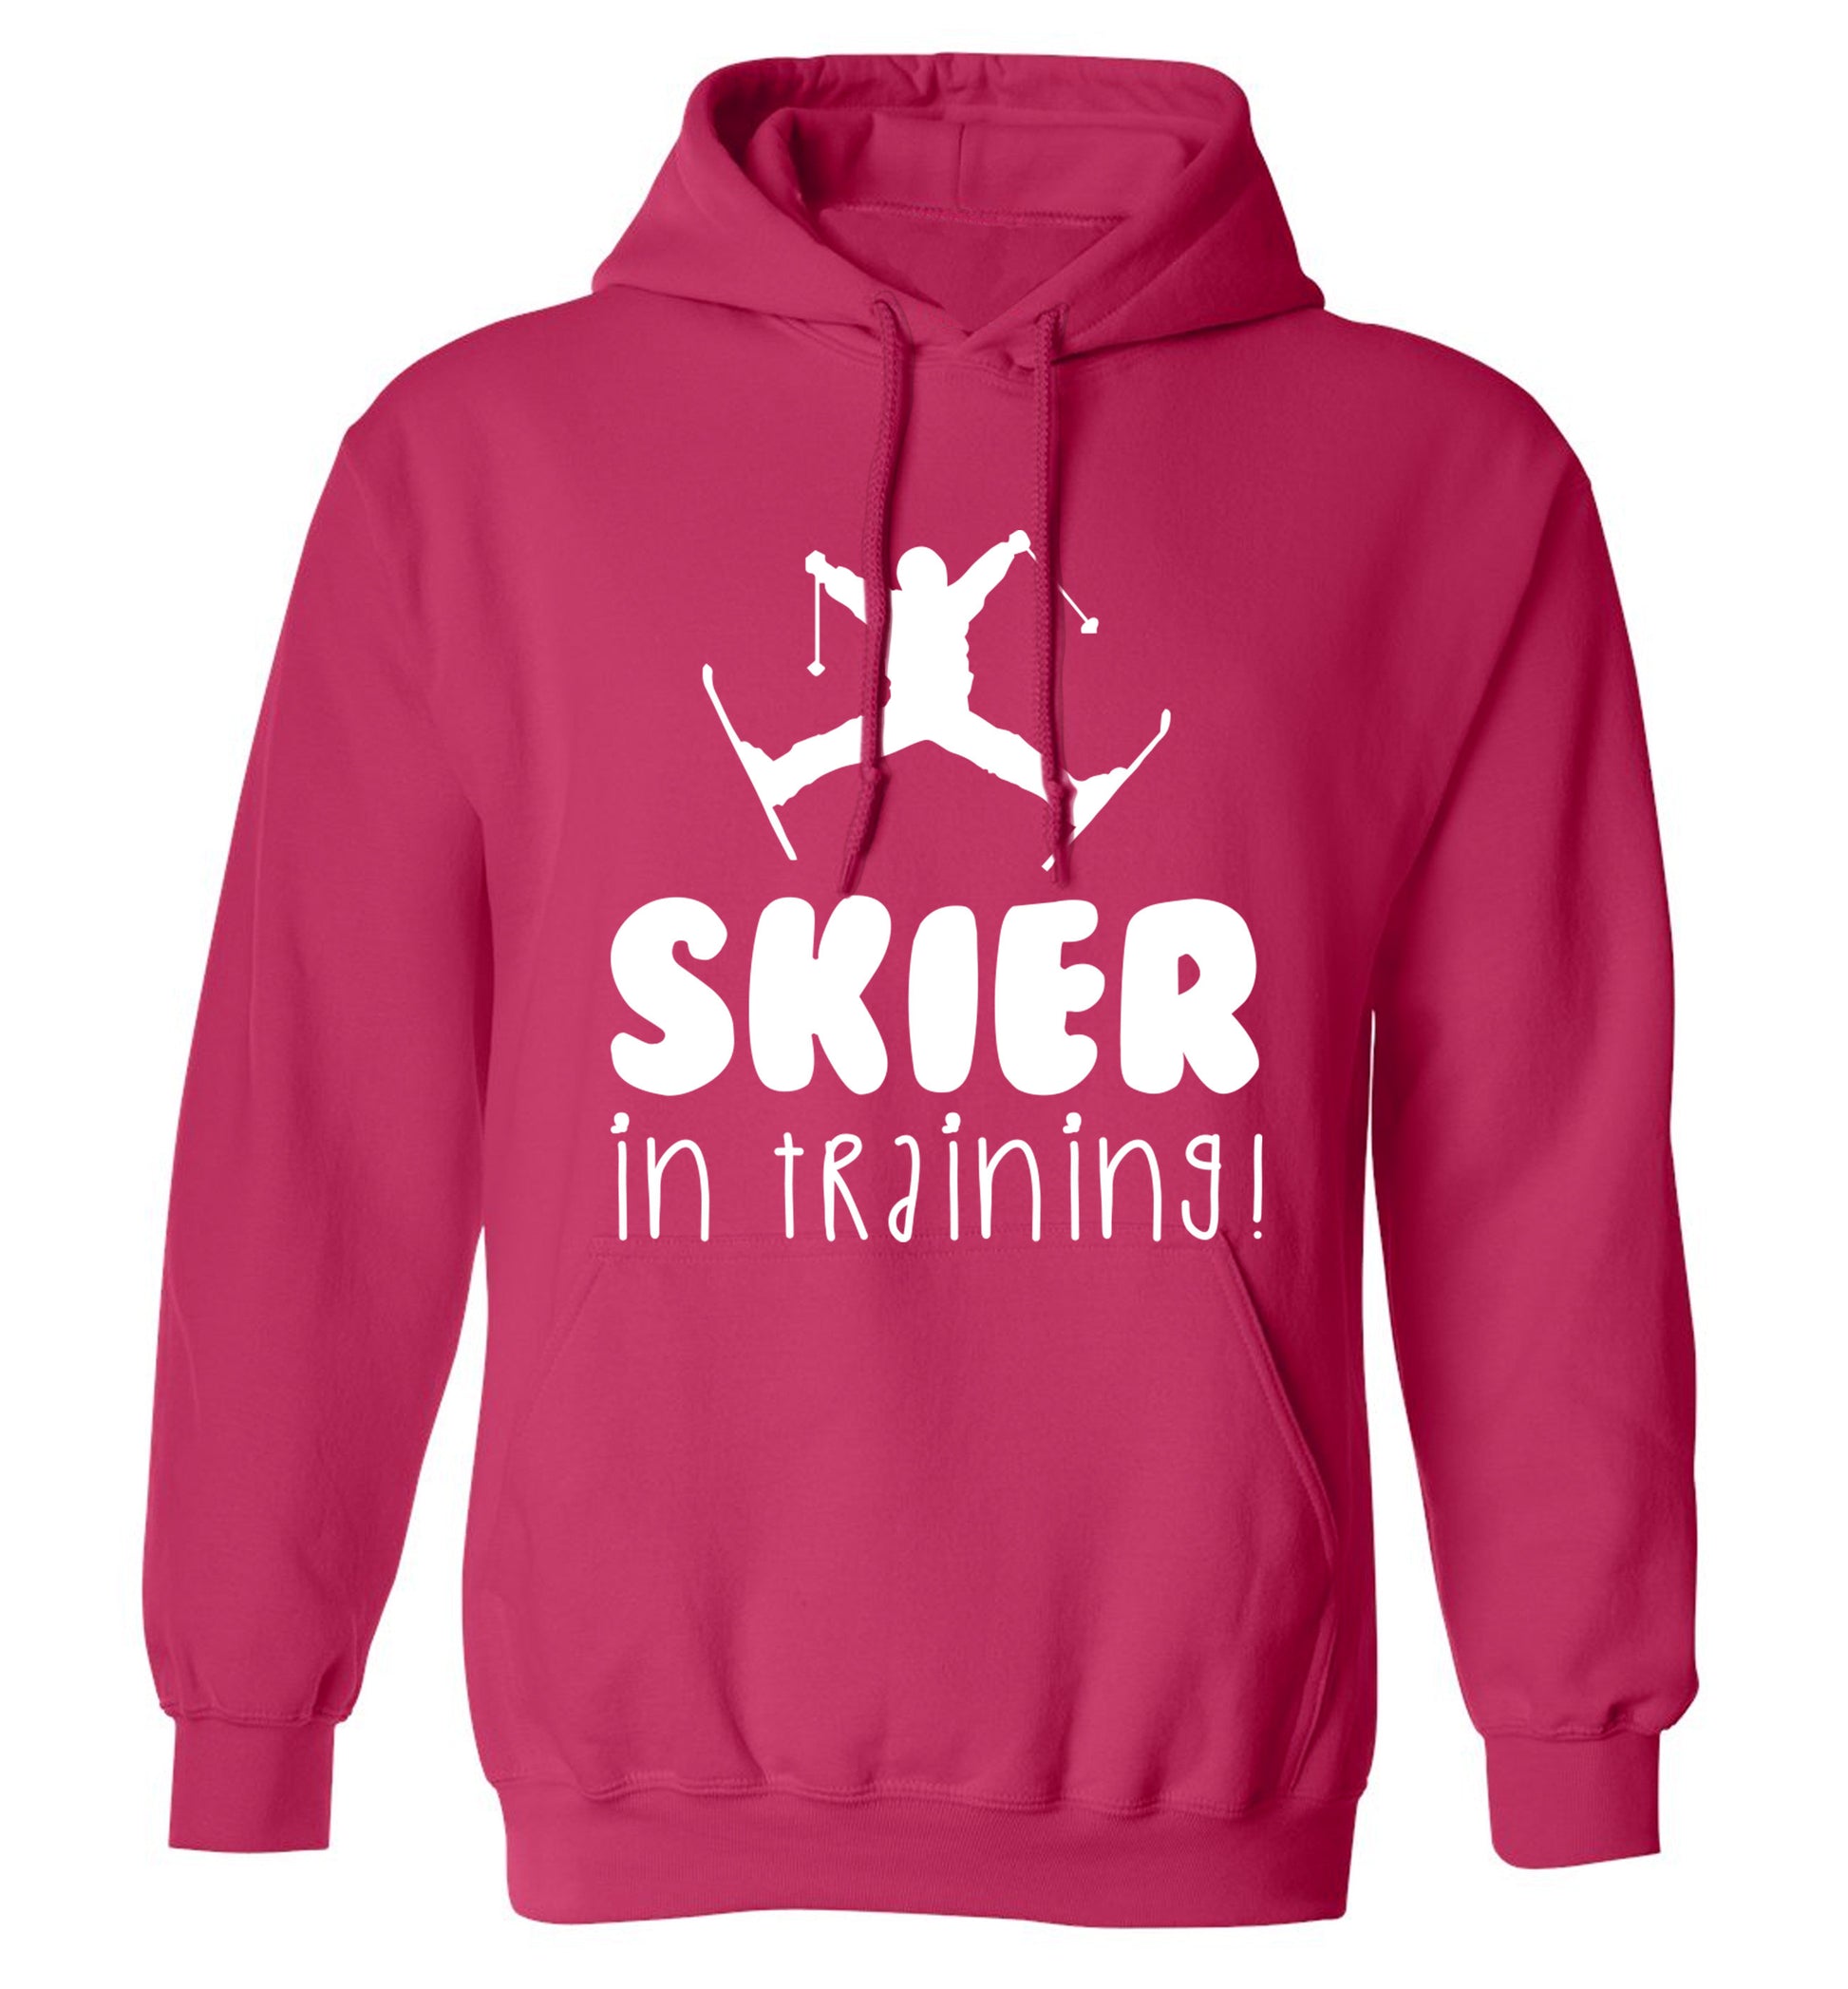 Skier in training adults unisex pink hoodie 2XL